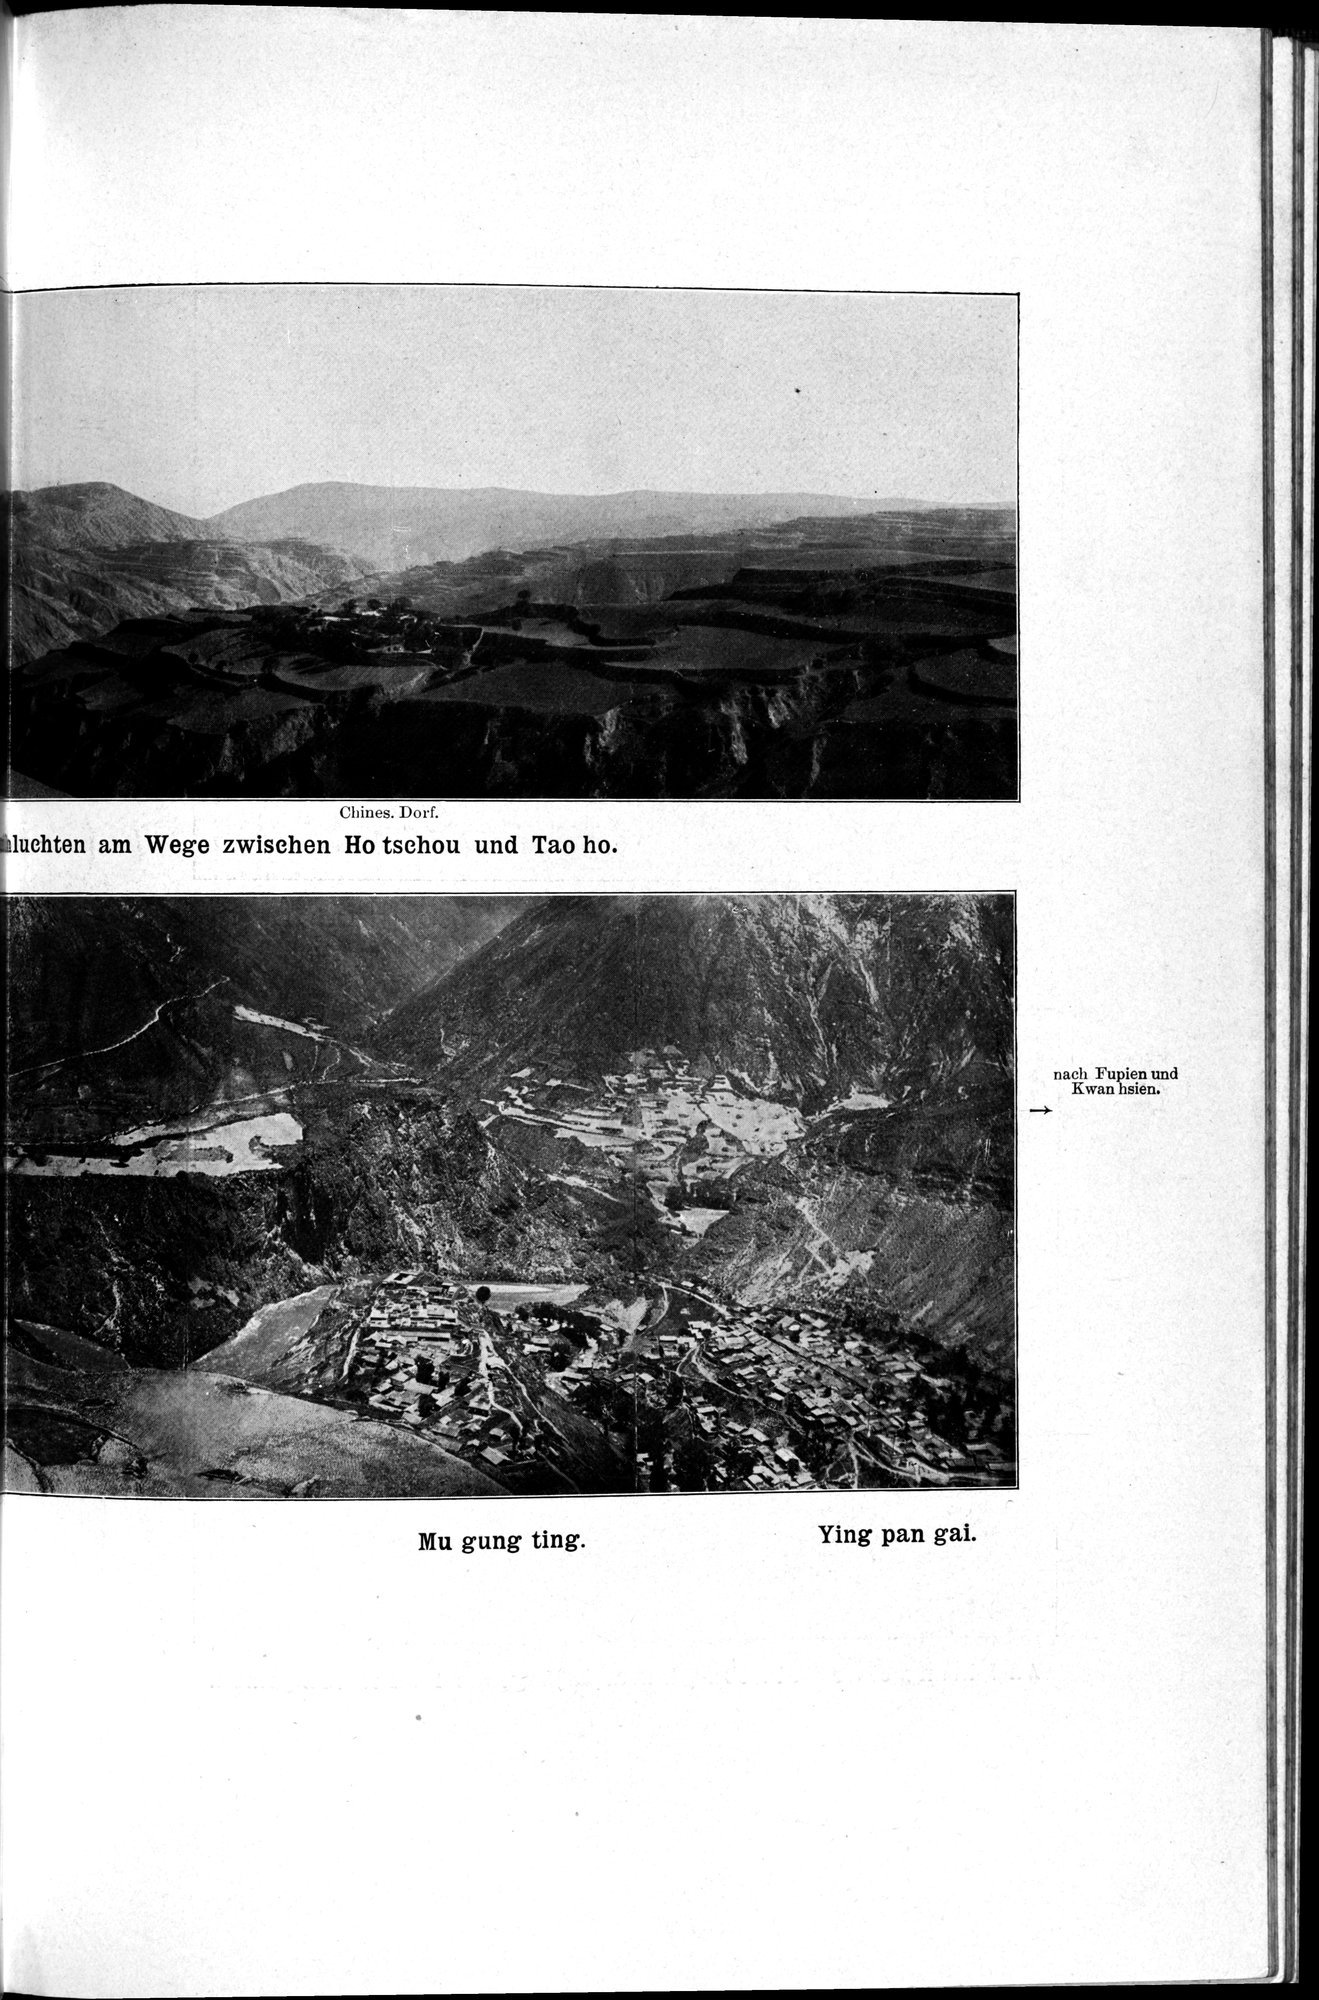 Meine Tibetreise : vol.2 / Page 321 (Grayscale High Resolution Image)